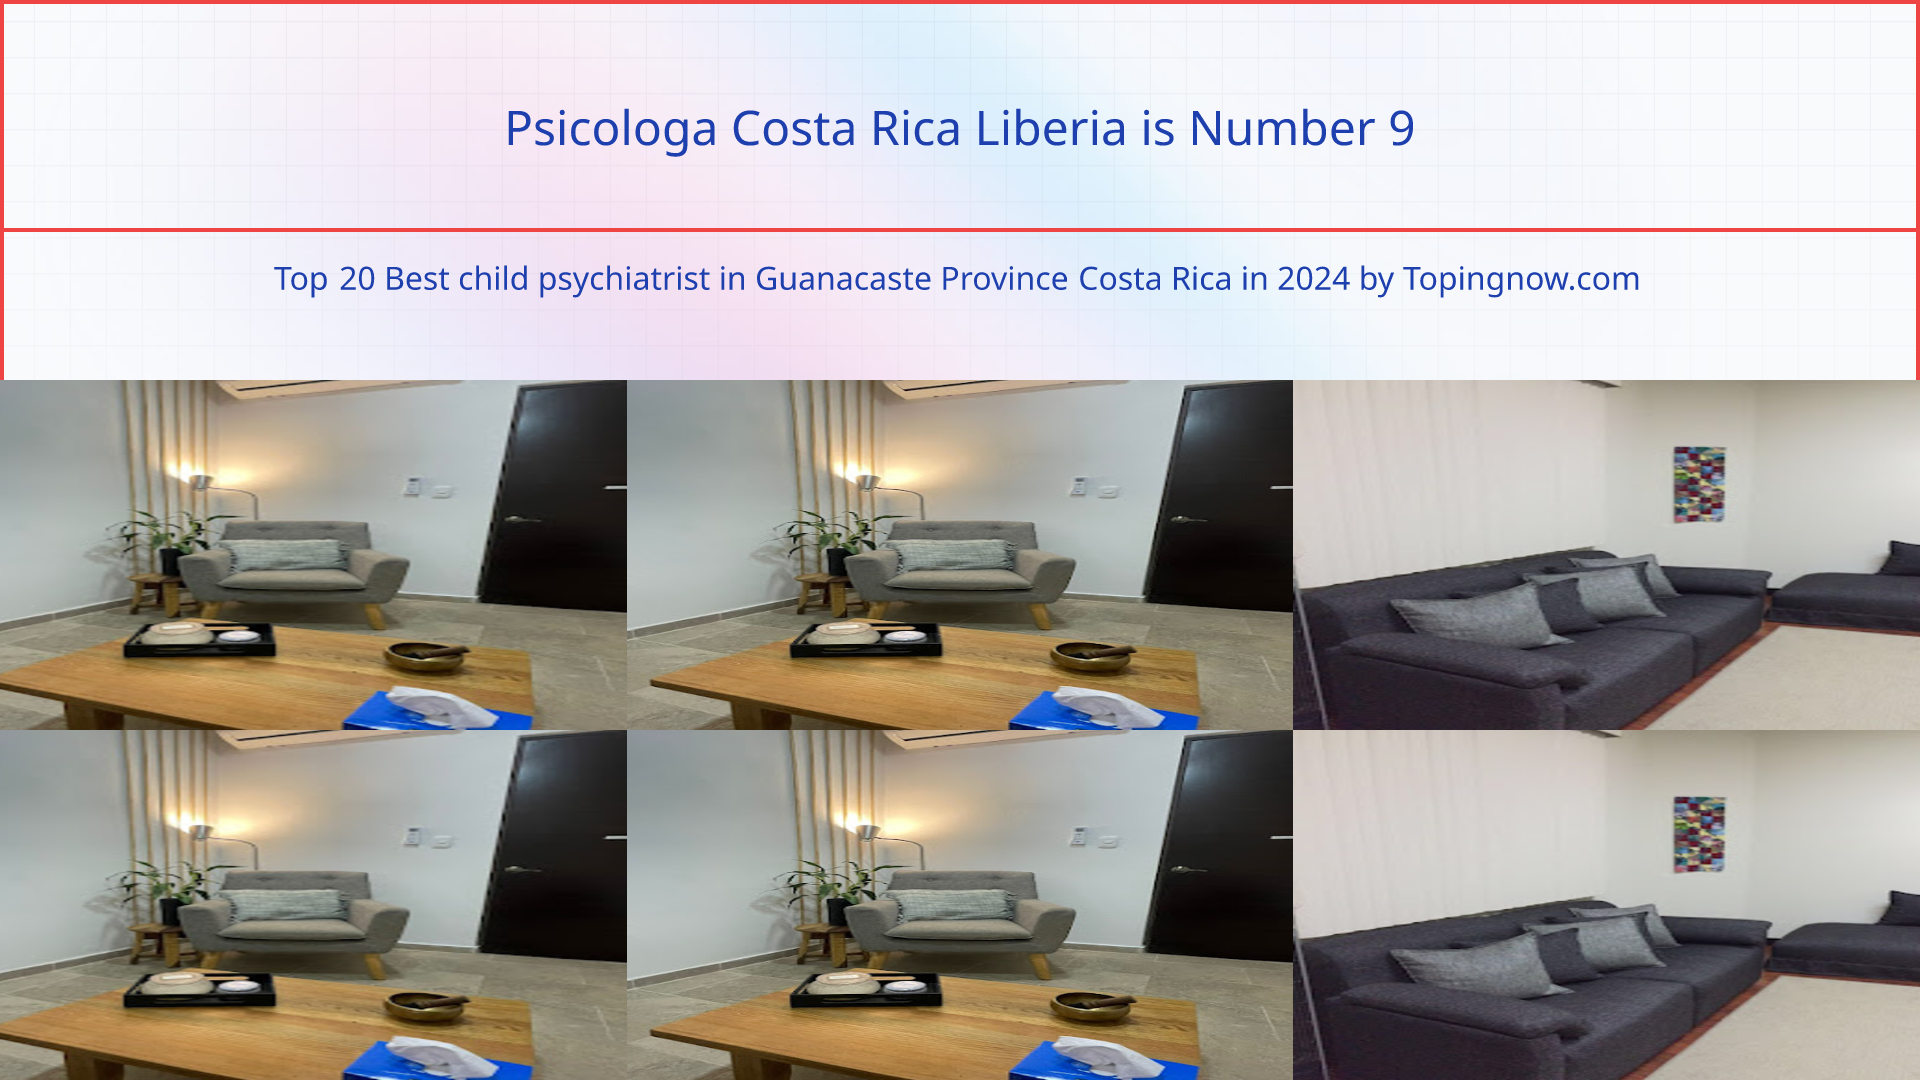 Psicologa Costa Rica Liberia: Top 20 Best child psychiatrist in Guanacaste Province Costa Rica in 2024